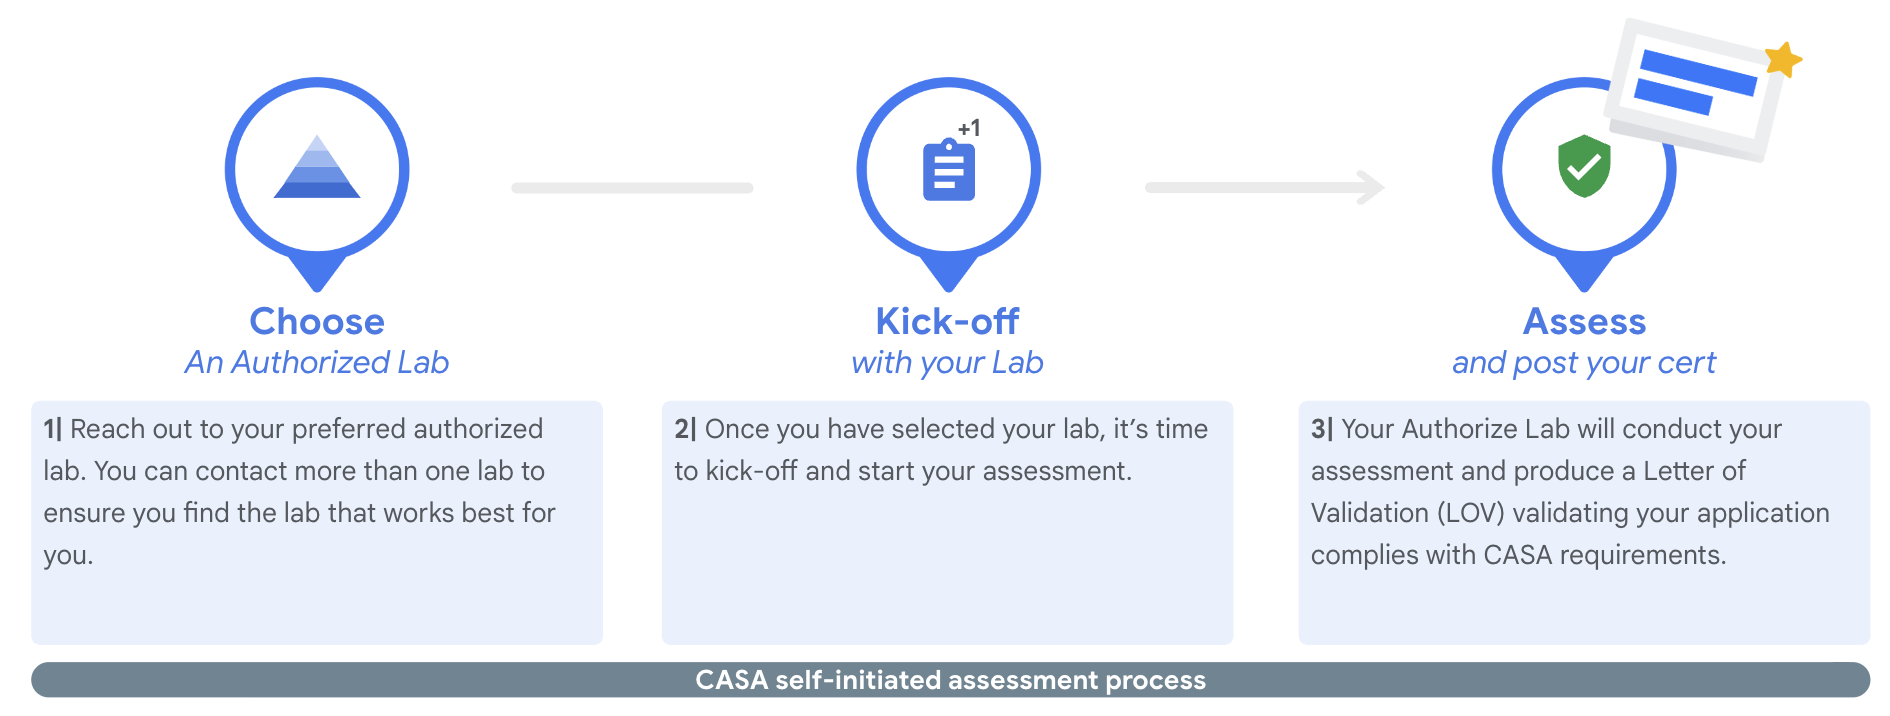 تقييم ذاتي لبدء برنامج CASA